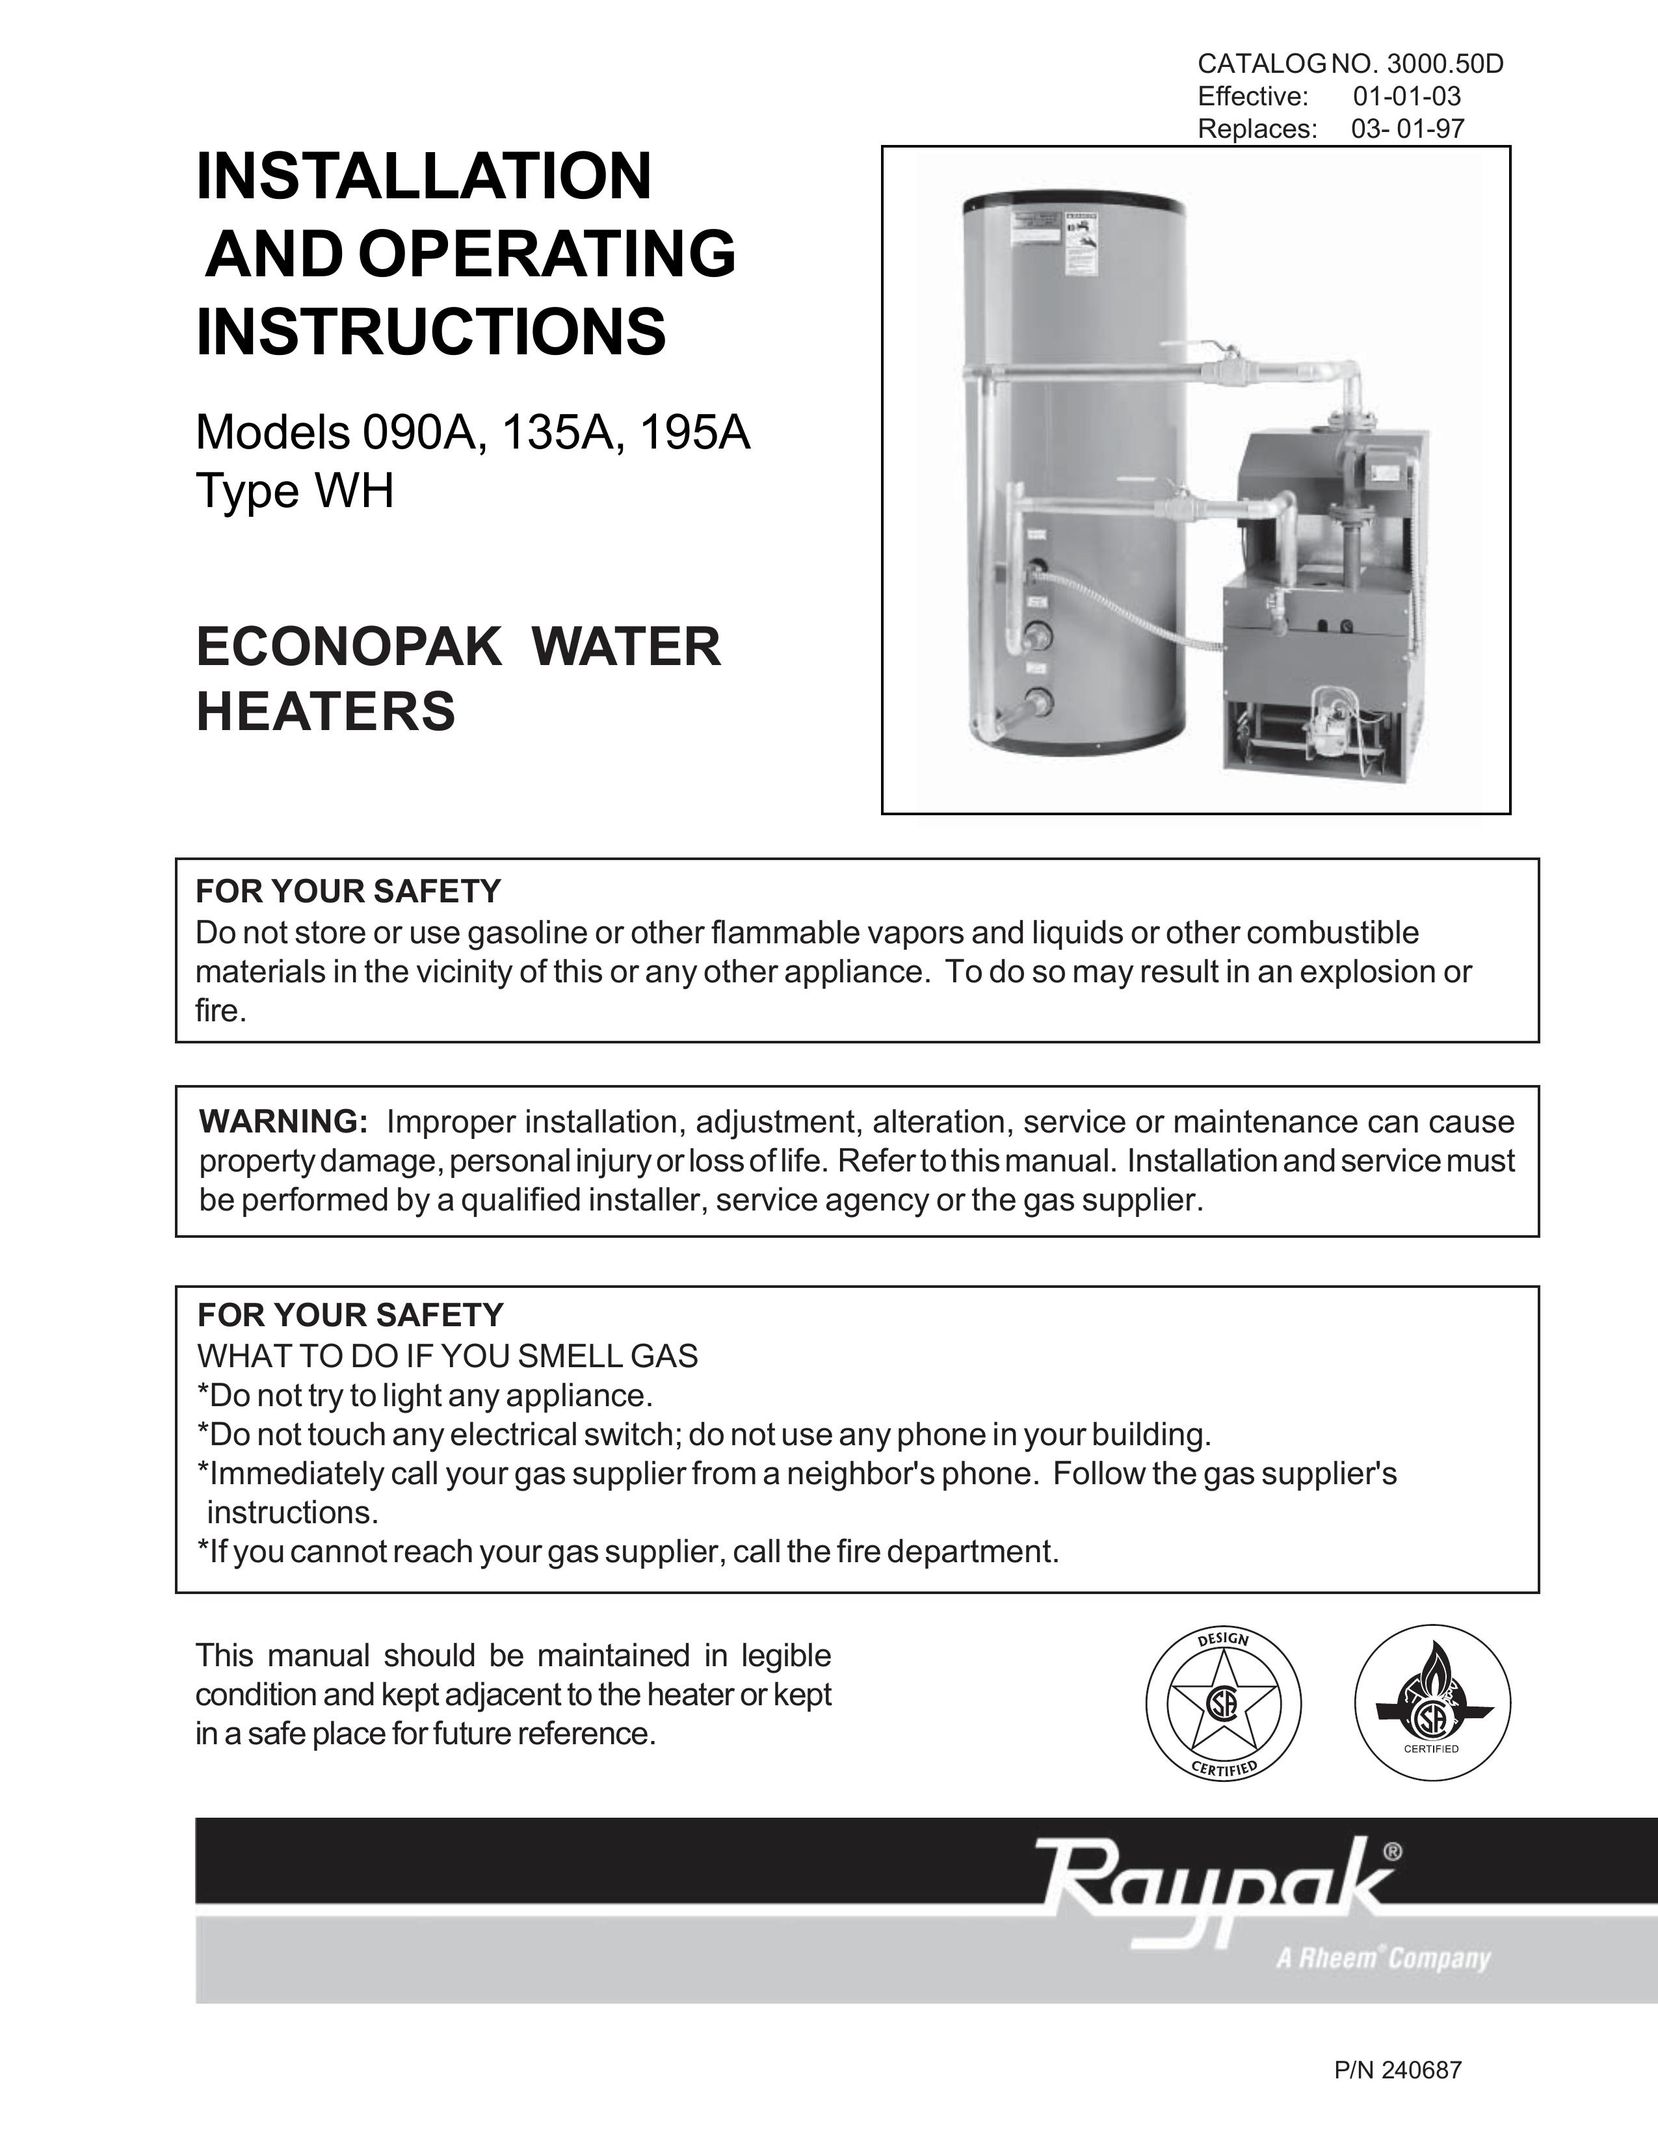 Raypak 090A Water Heater User Manual